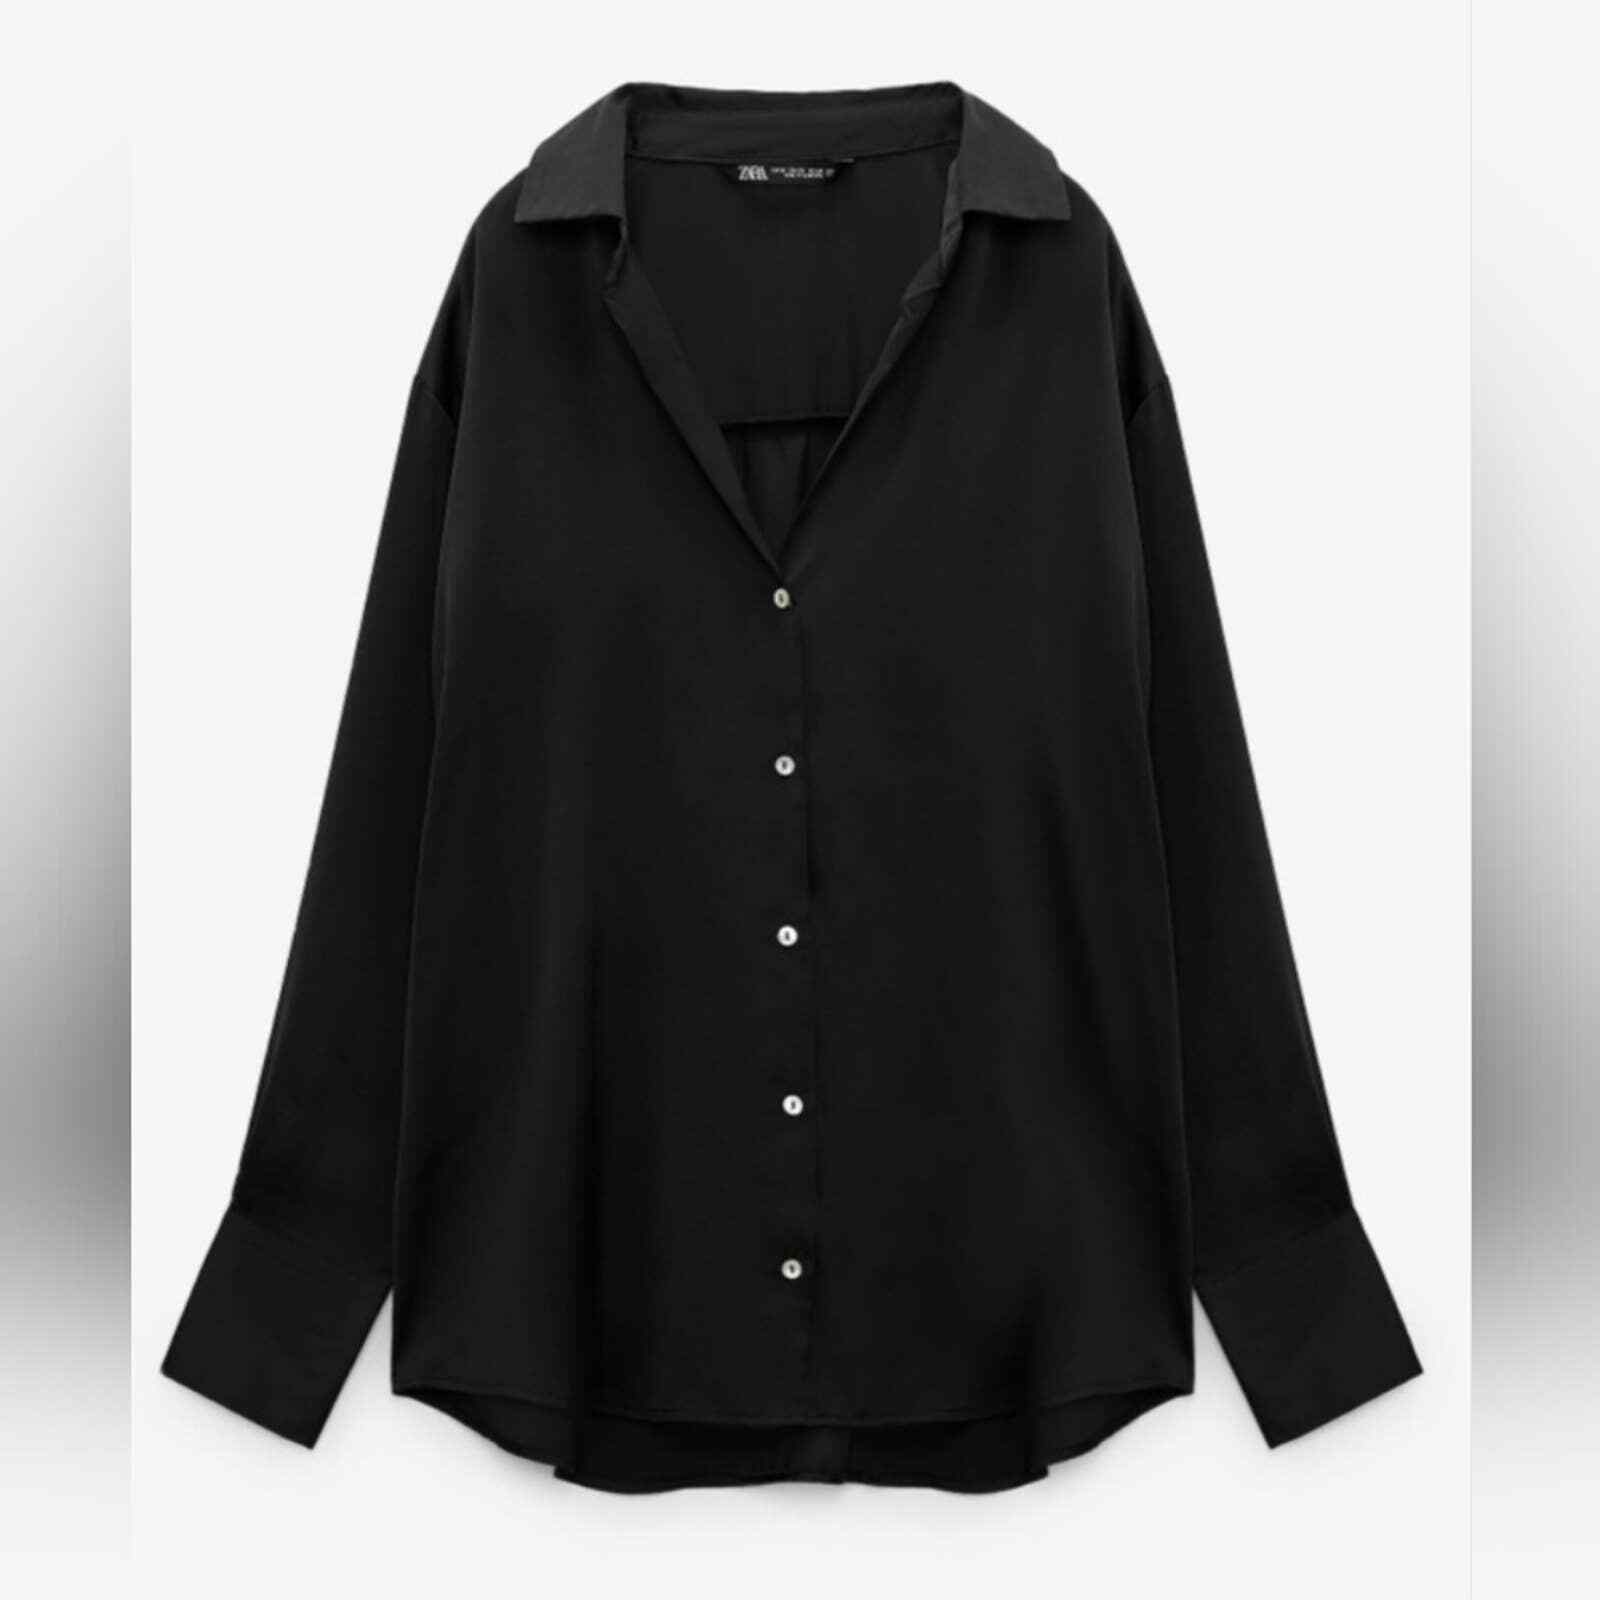 Zara Black Satin Effect Shirt Classic Boho Chic S… - image 3